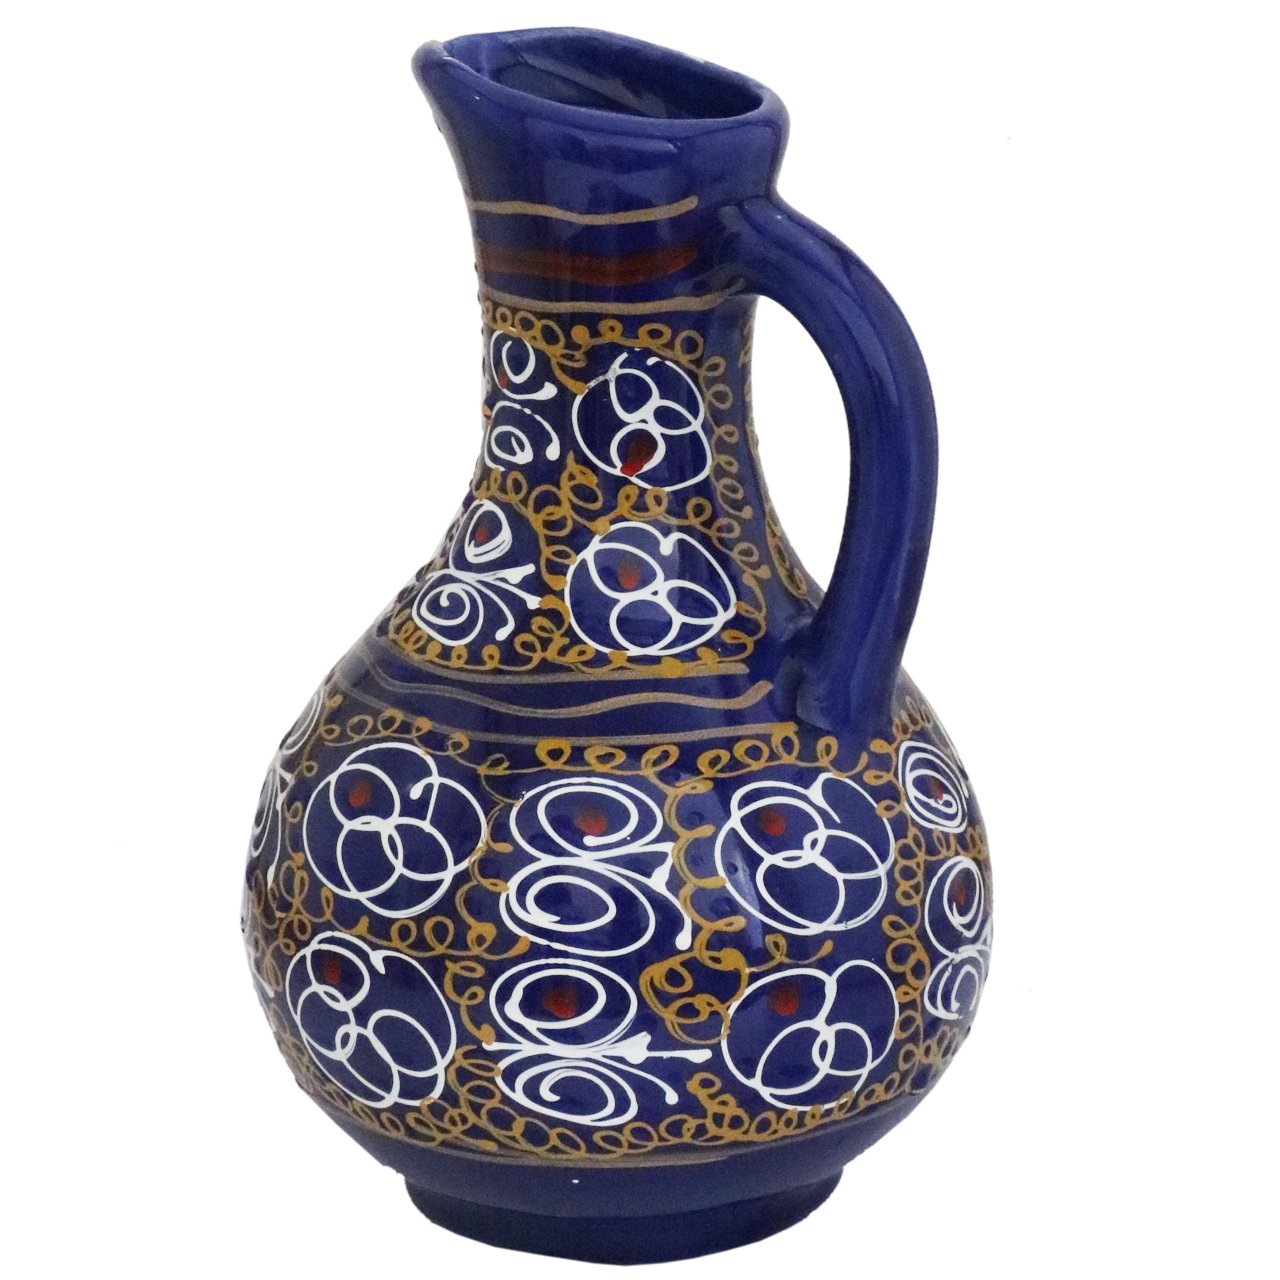 Handmade Pottery jug code 482,Handmade Pottery jug,pottery jug,clay jug